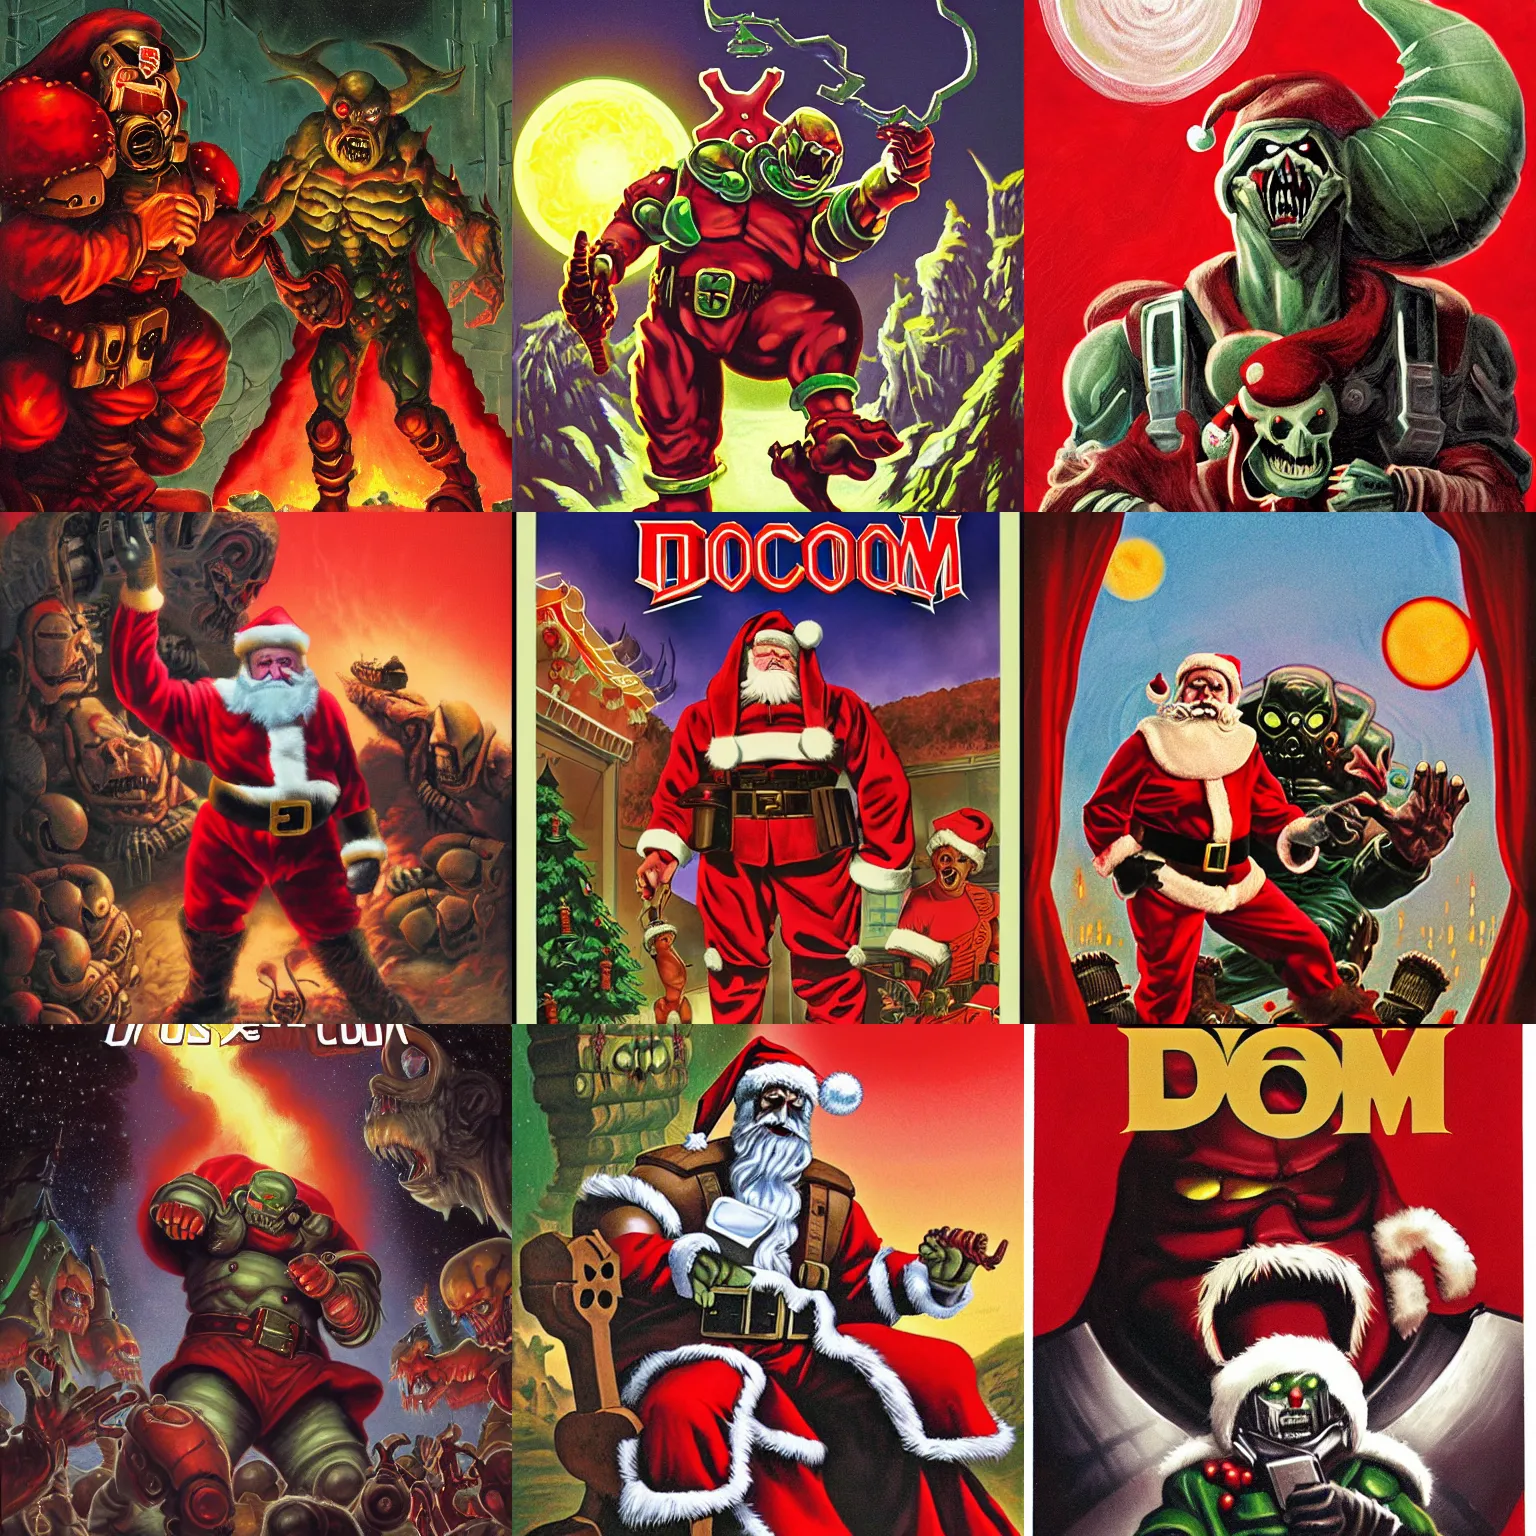 Prompt: doom cover with santa, by jimmy presler